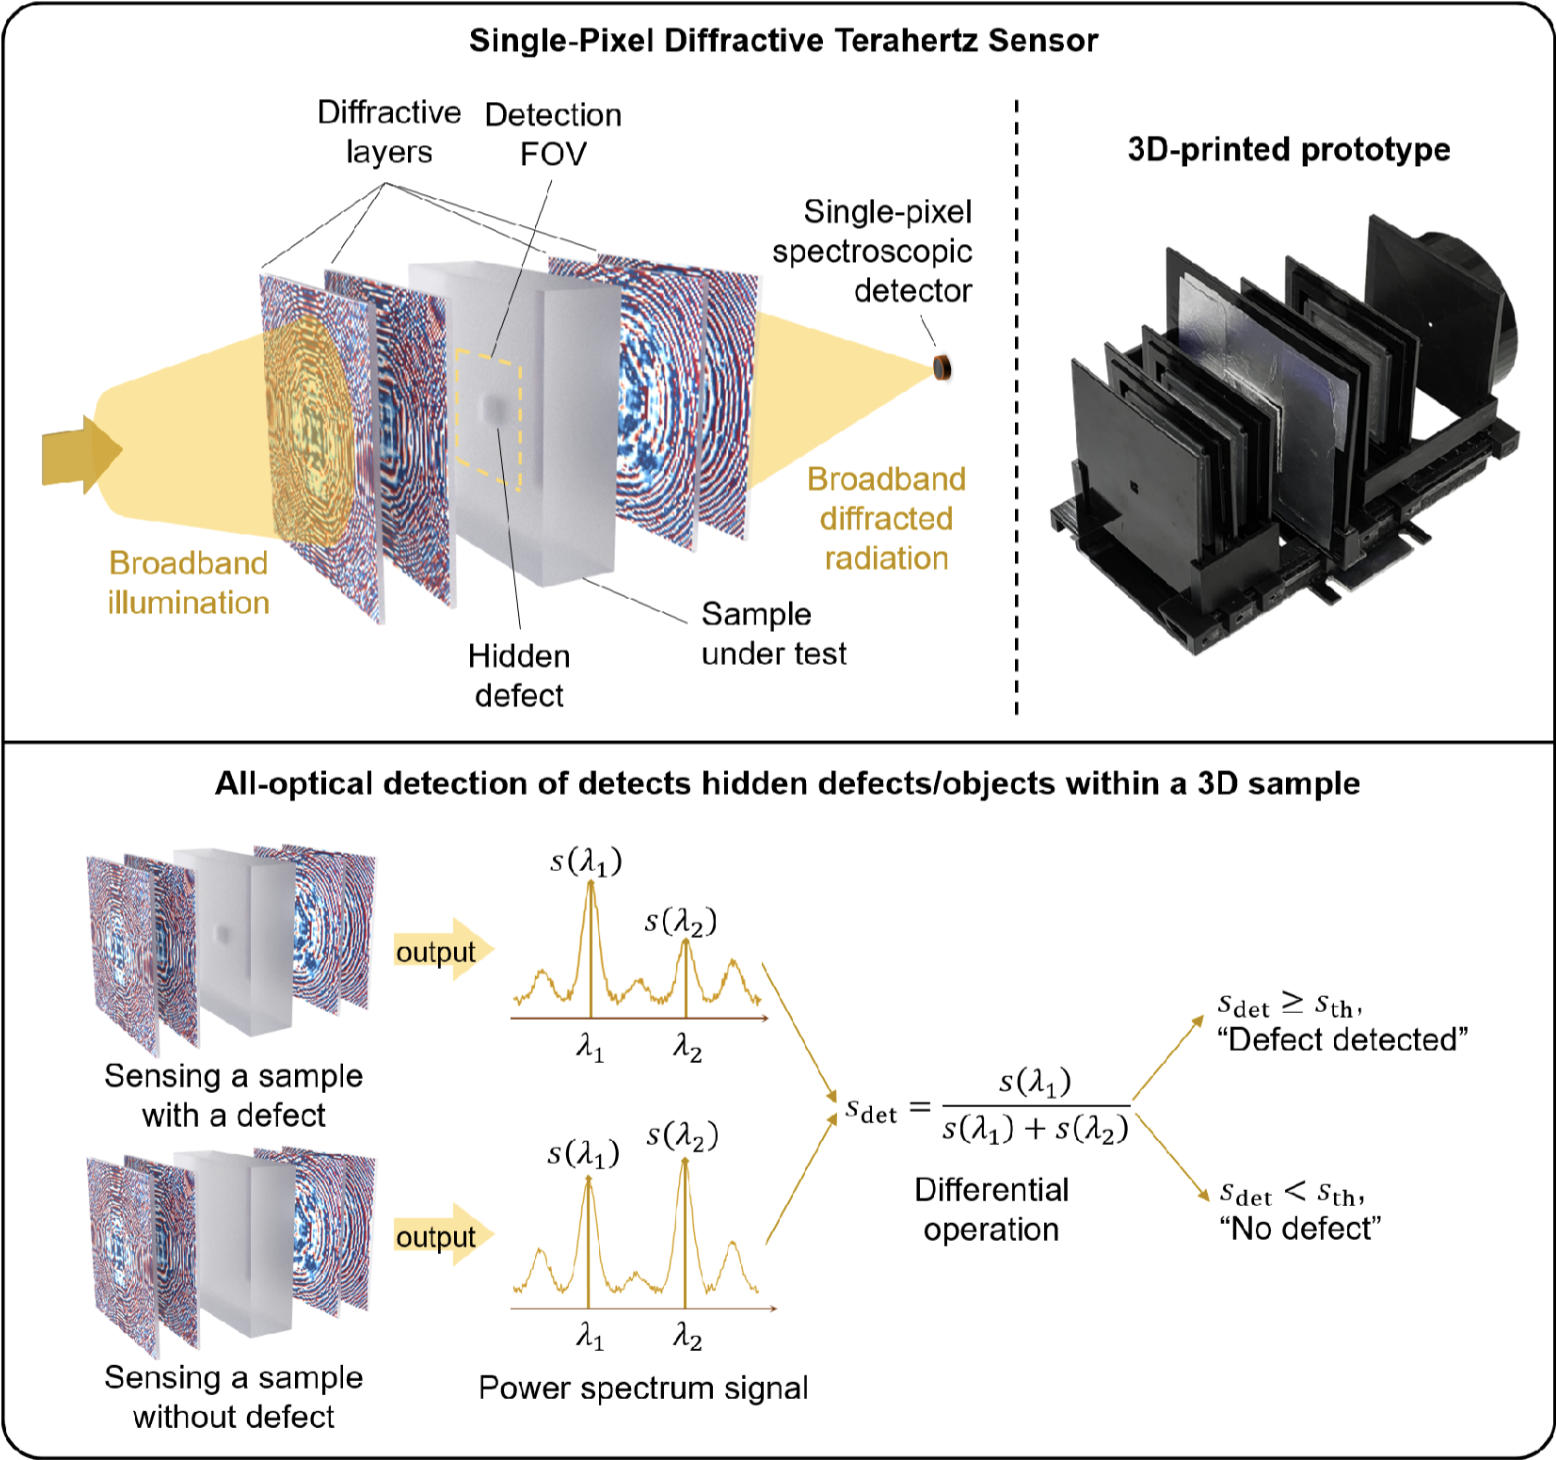 single-pixel diffractive terahertz sensor